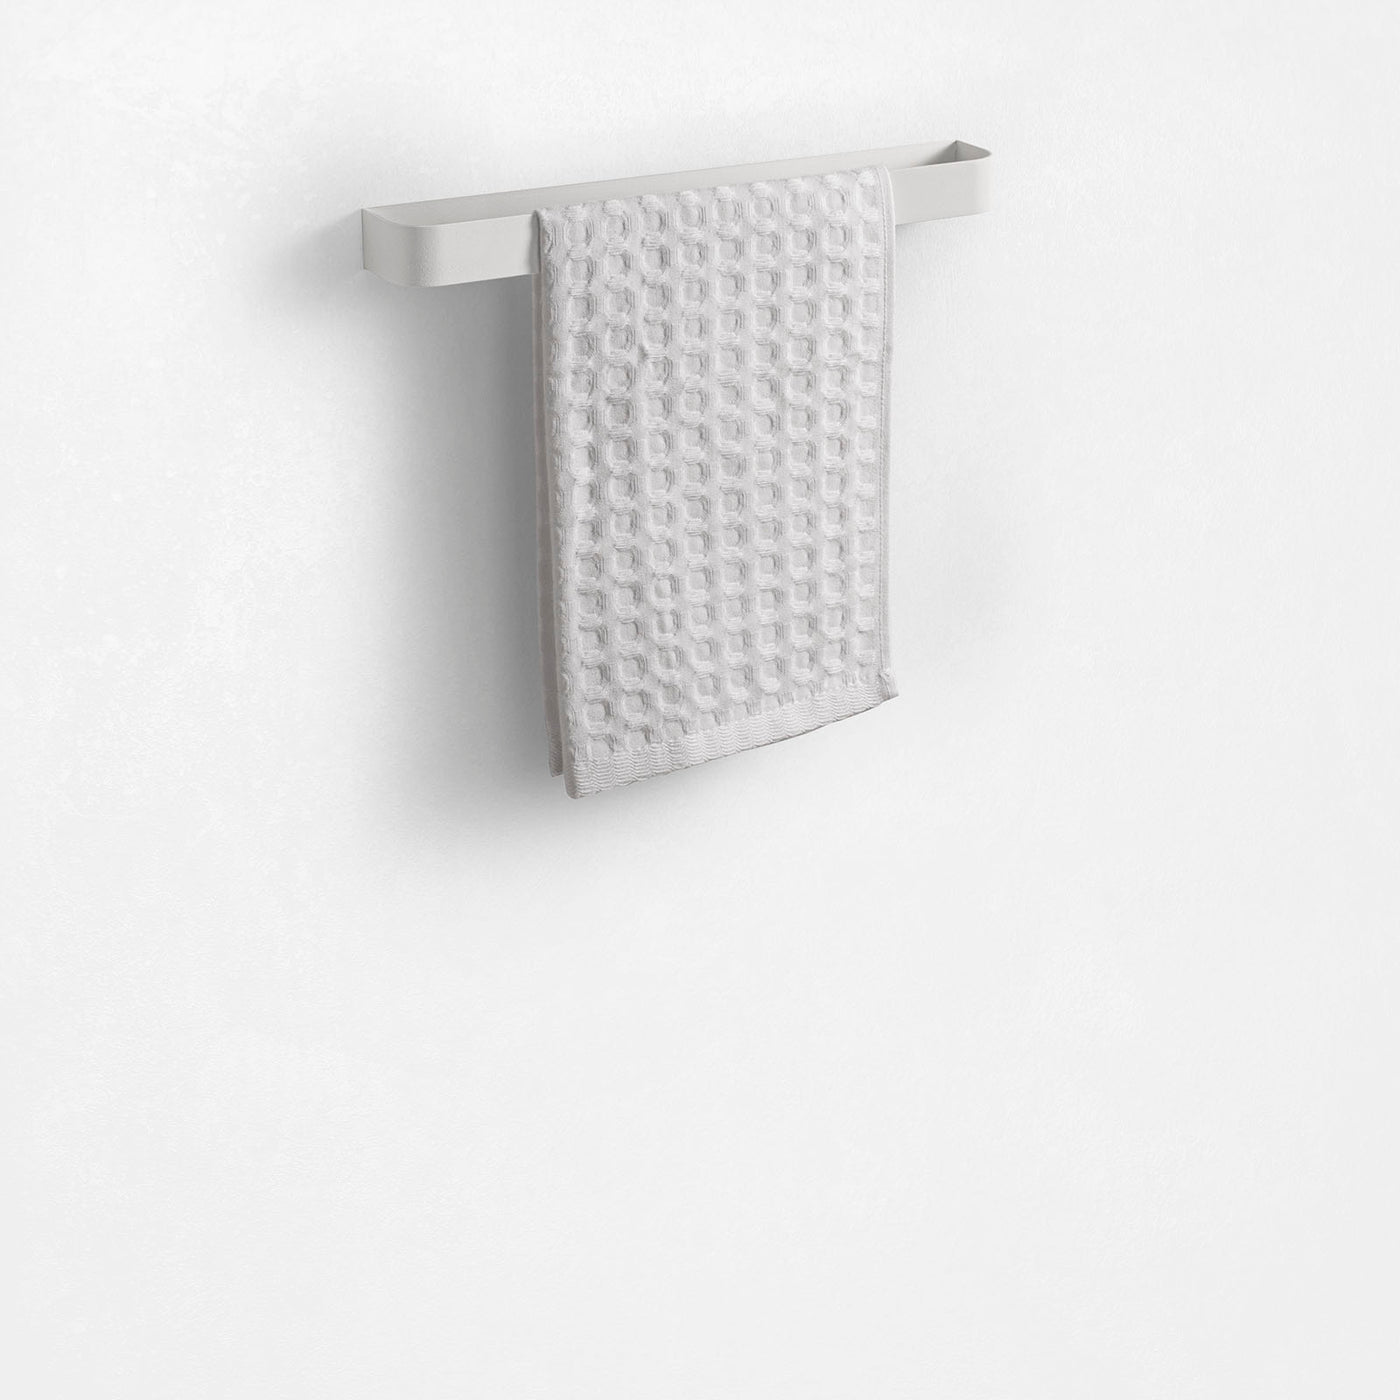 JIRO white wall towel holder